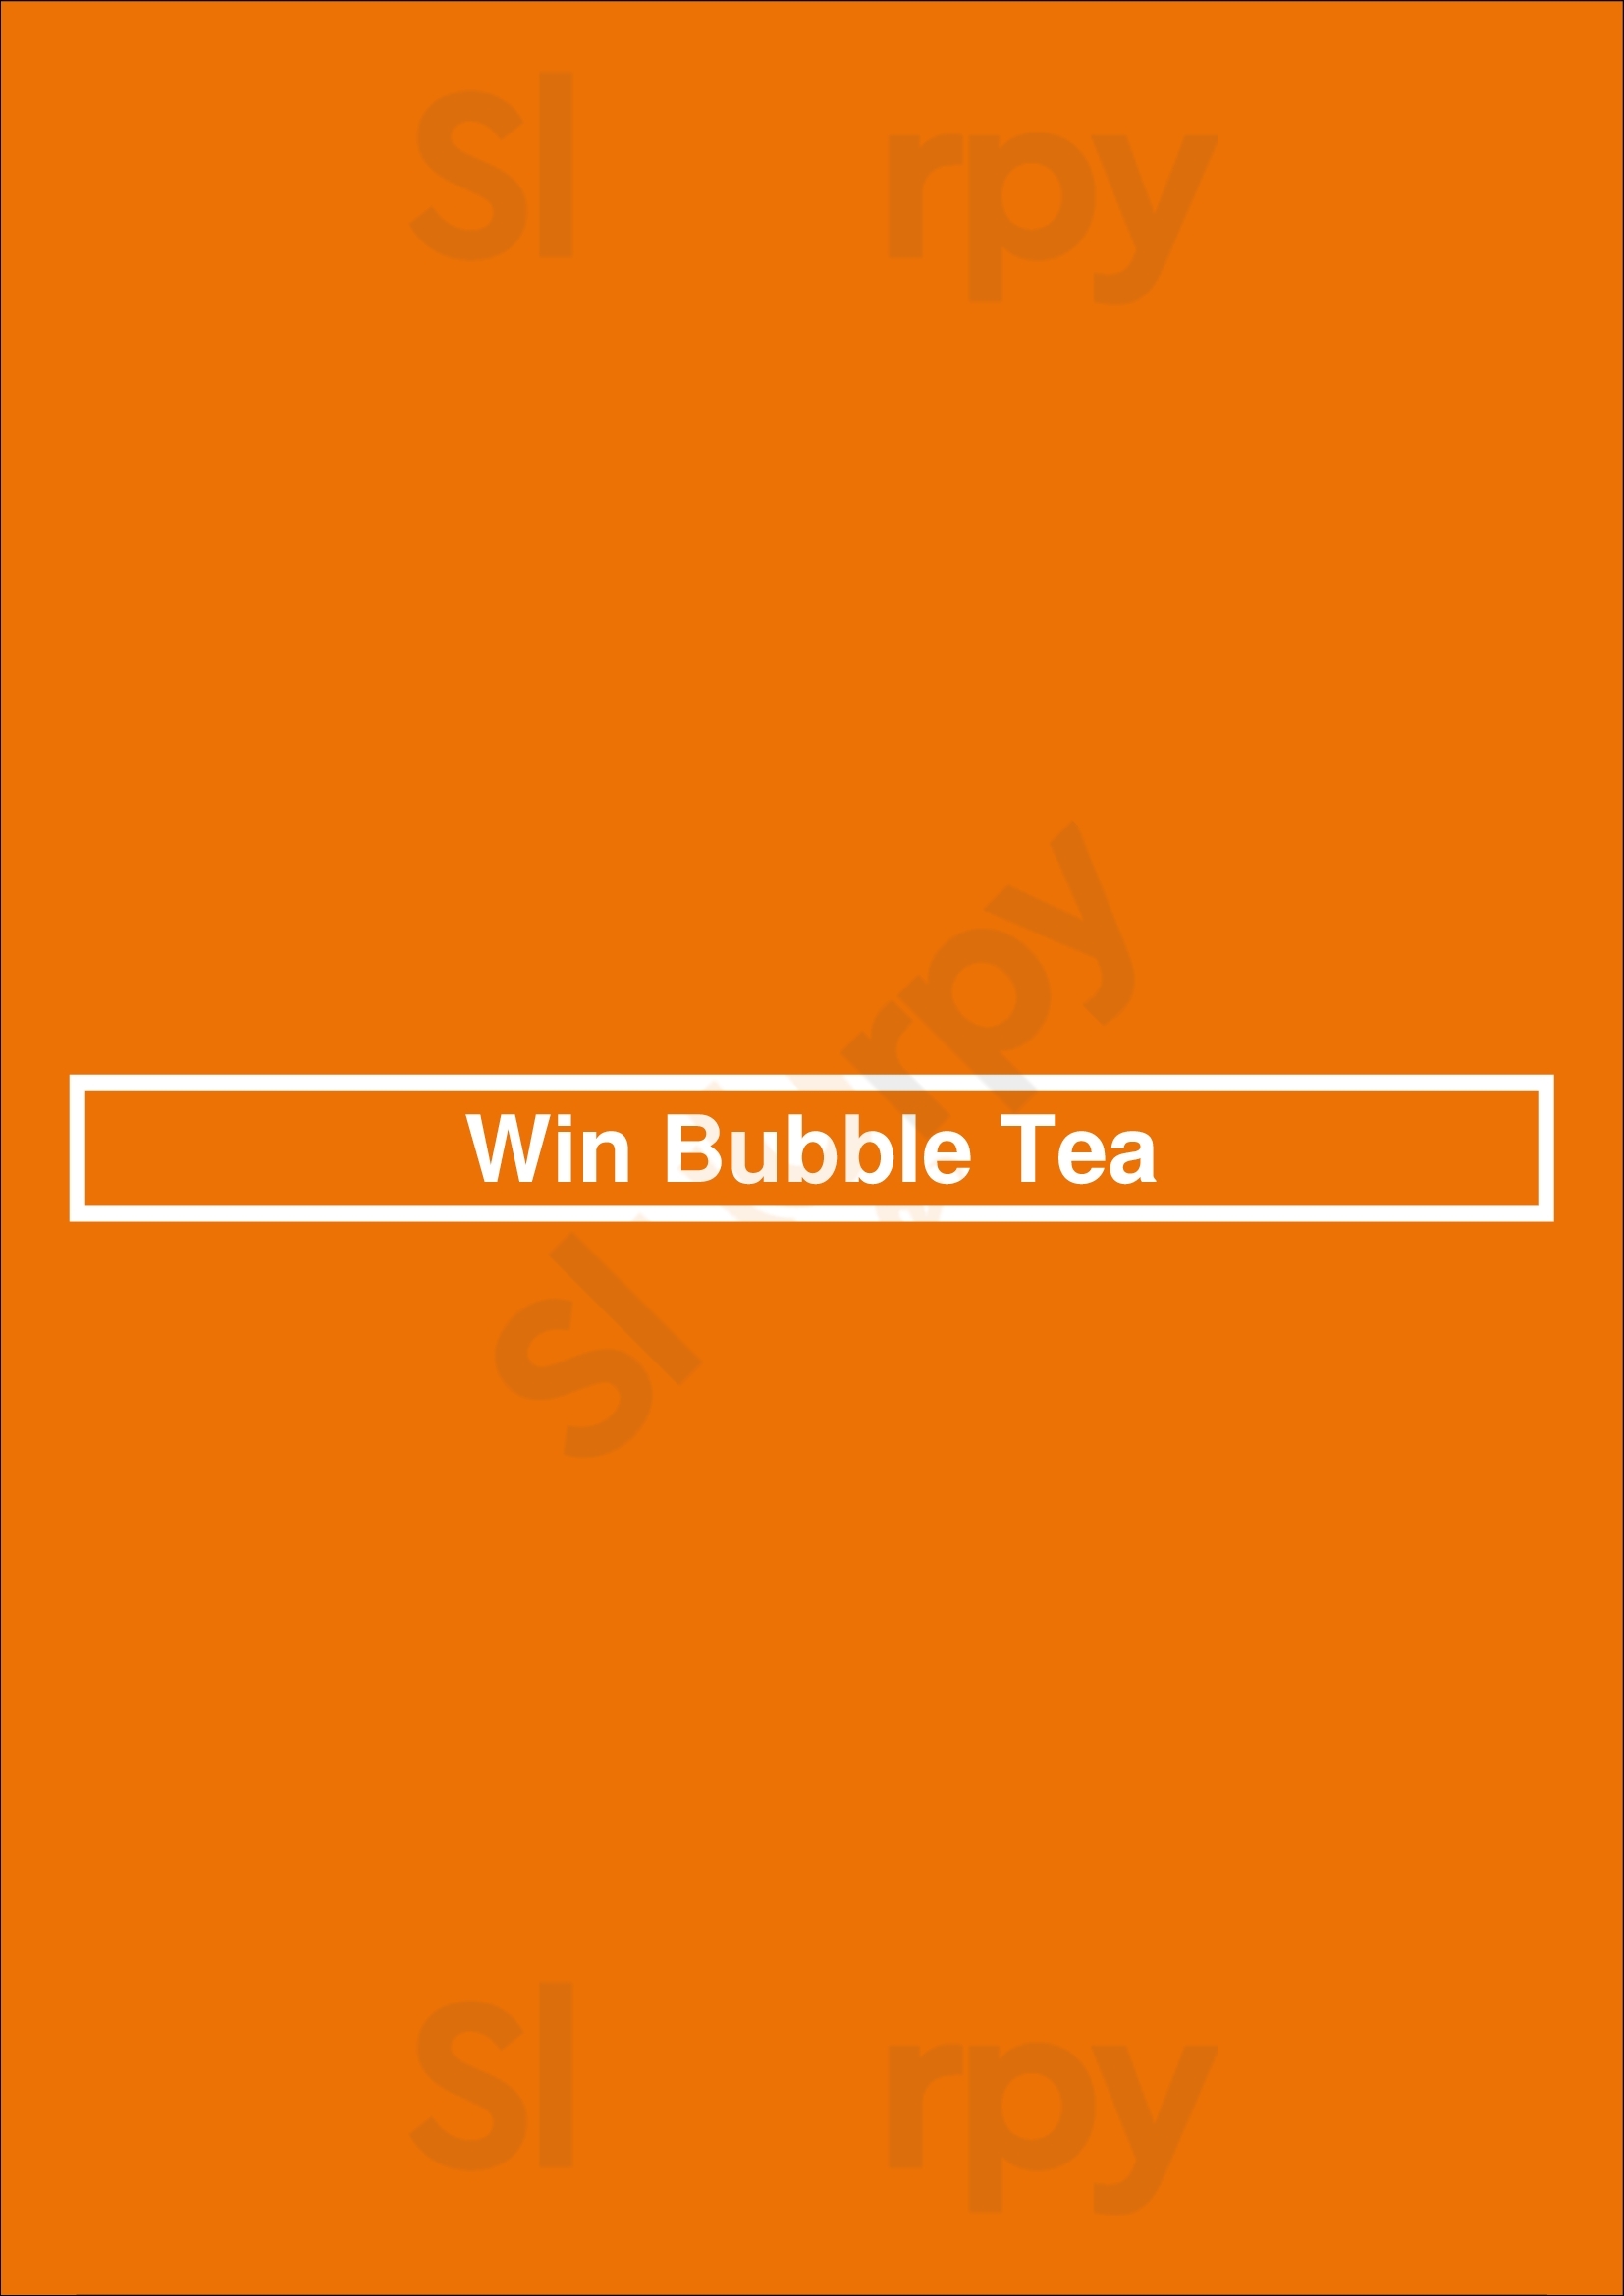 Win Bubble Tea Nashville Menu - 1